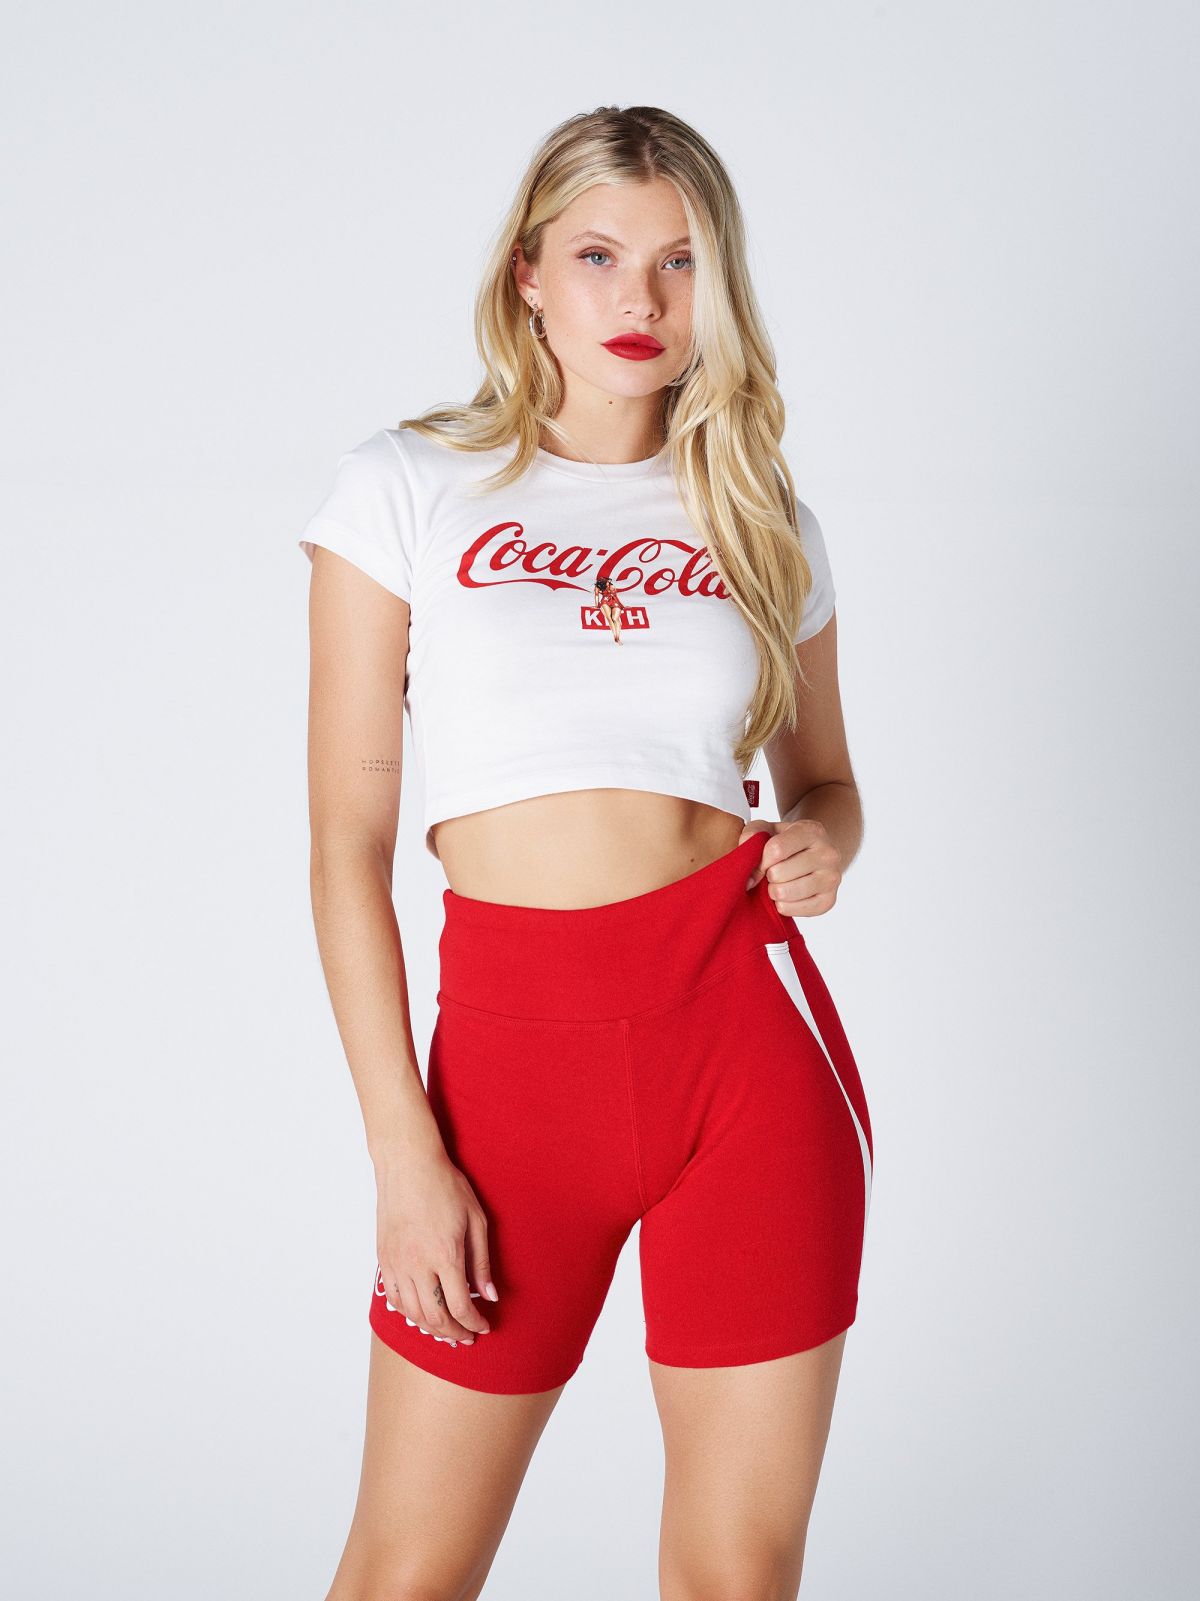 Josie Canseco â€“ Kith x Coca Cola 2019 photoshoot